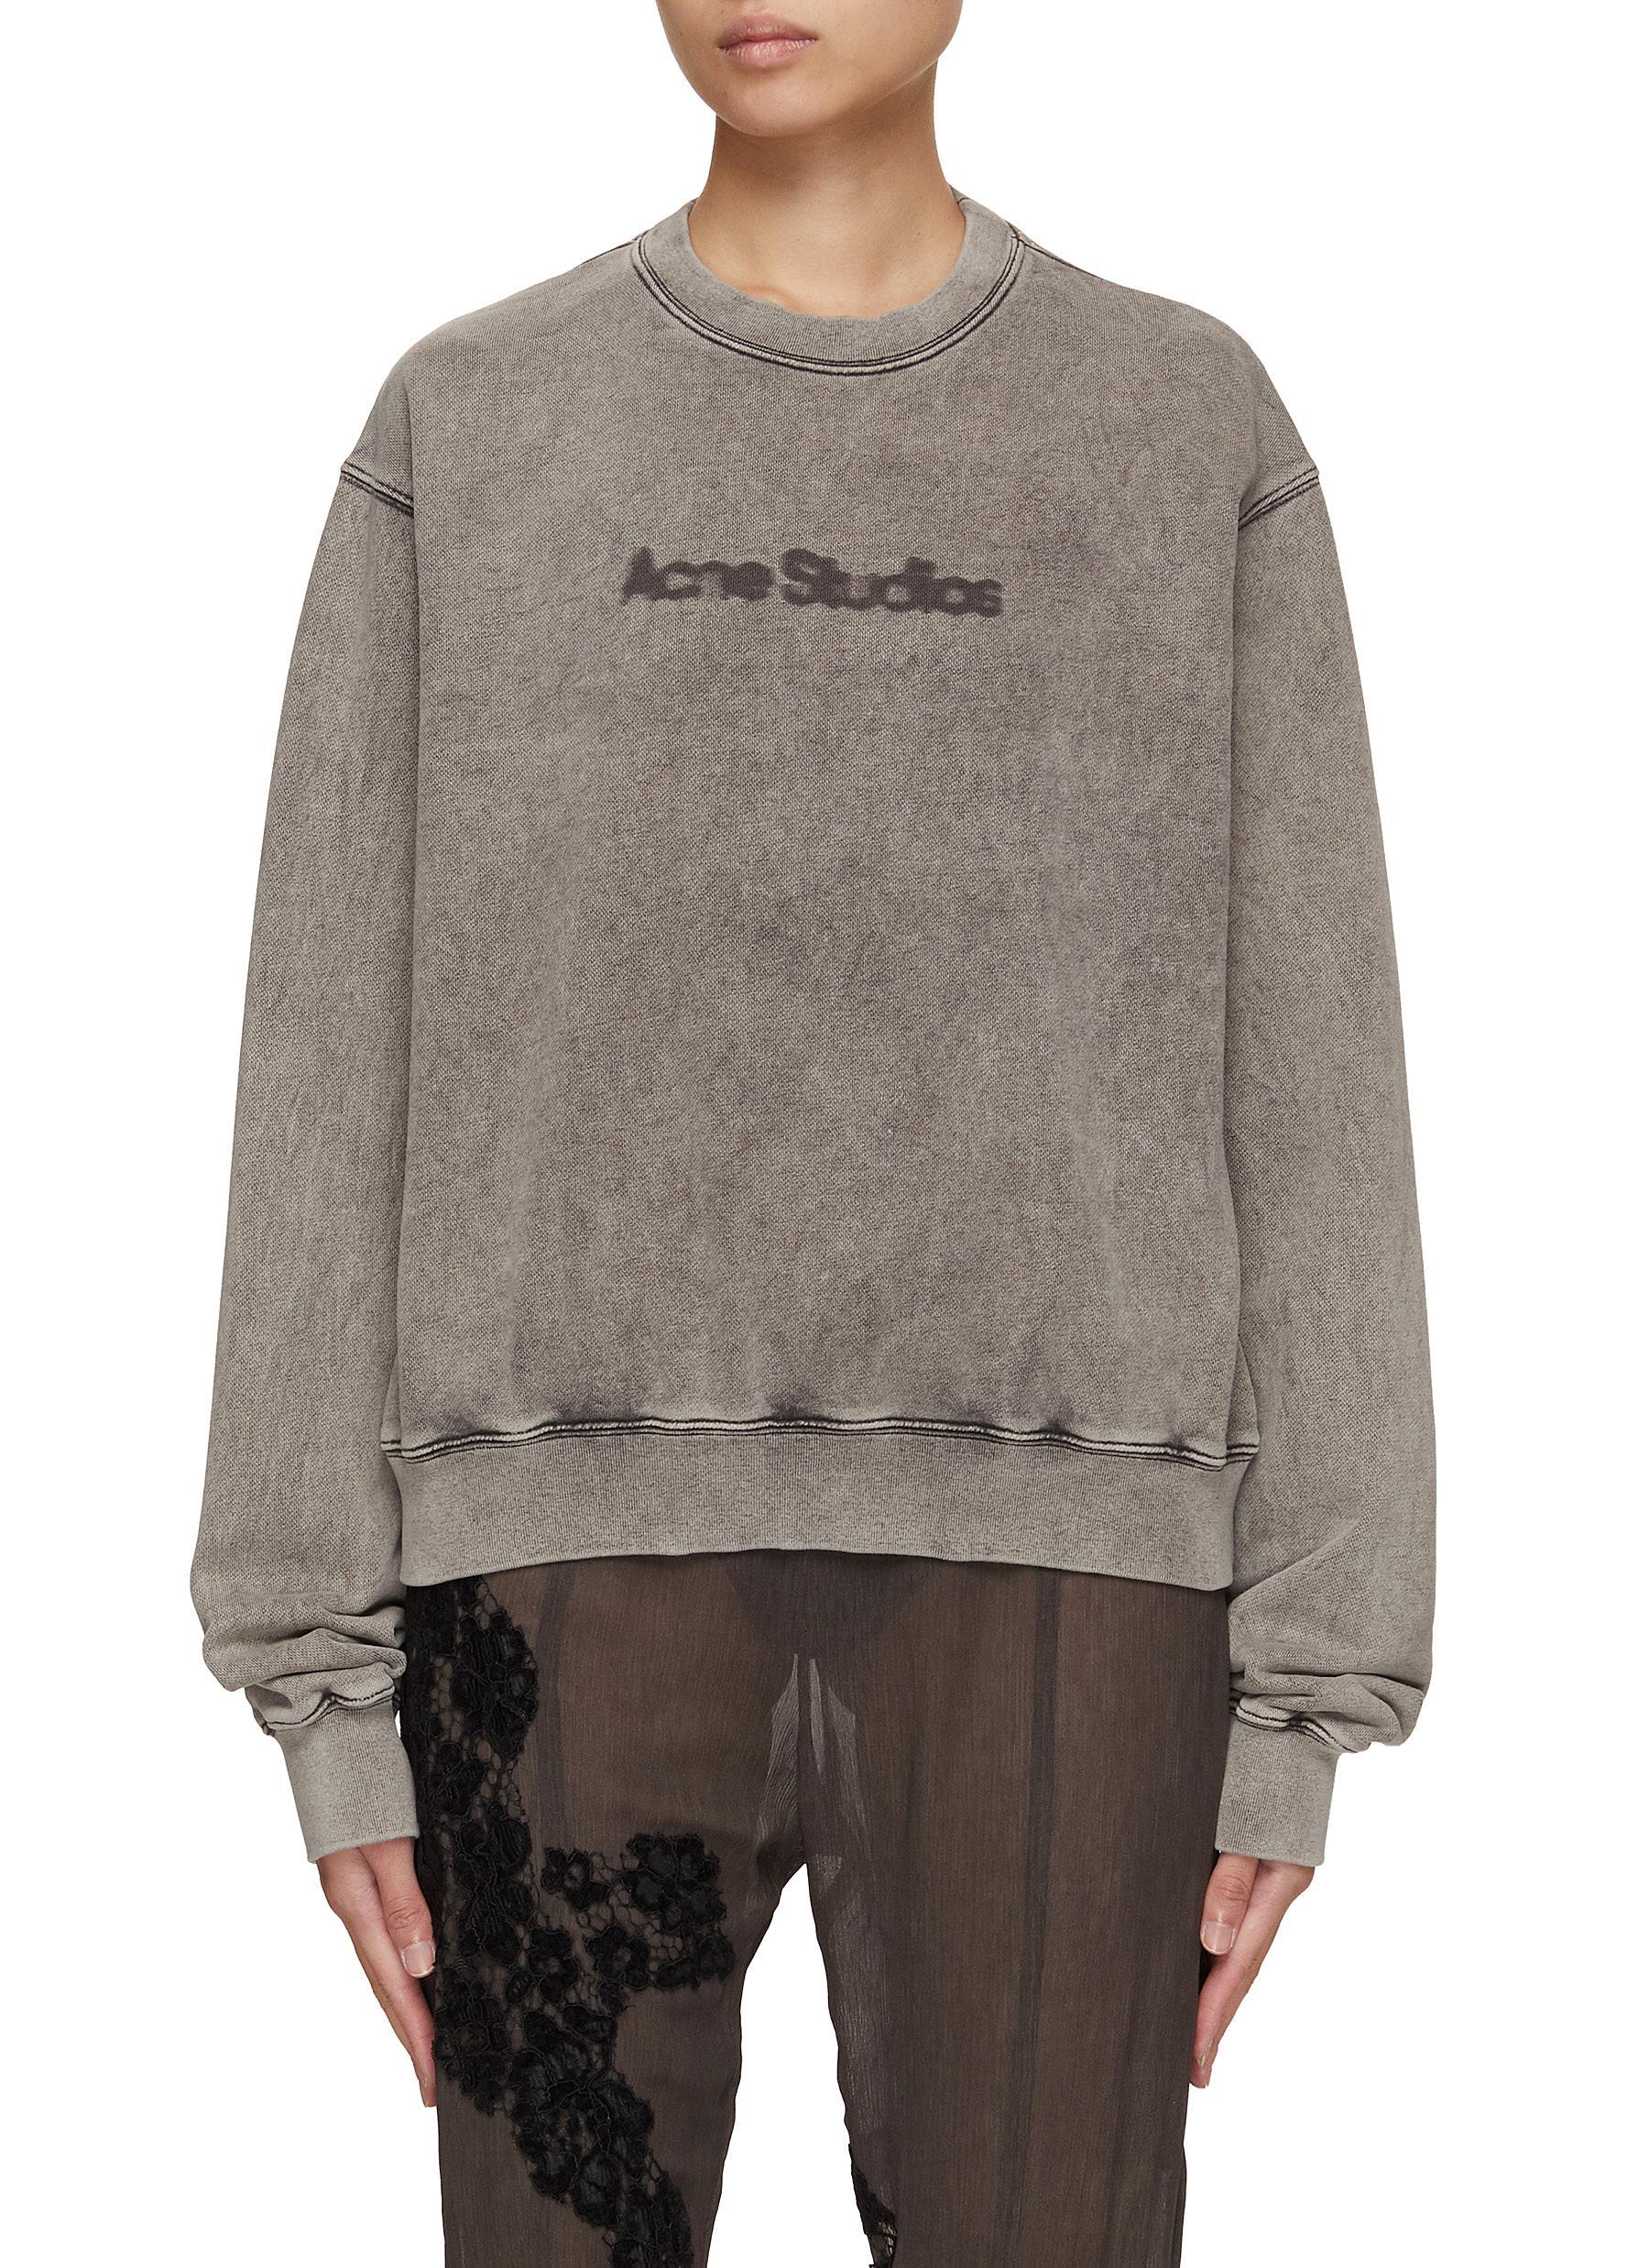 Acne Studios Blurred Logo Print Sweater in Gray | Lyst